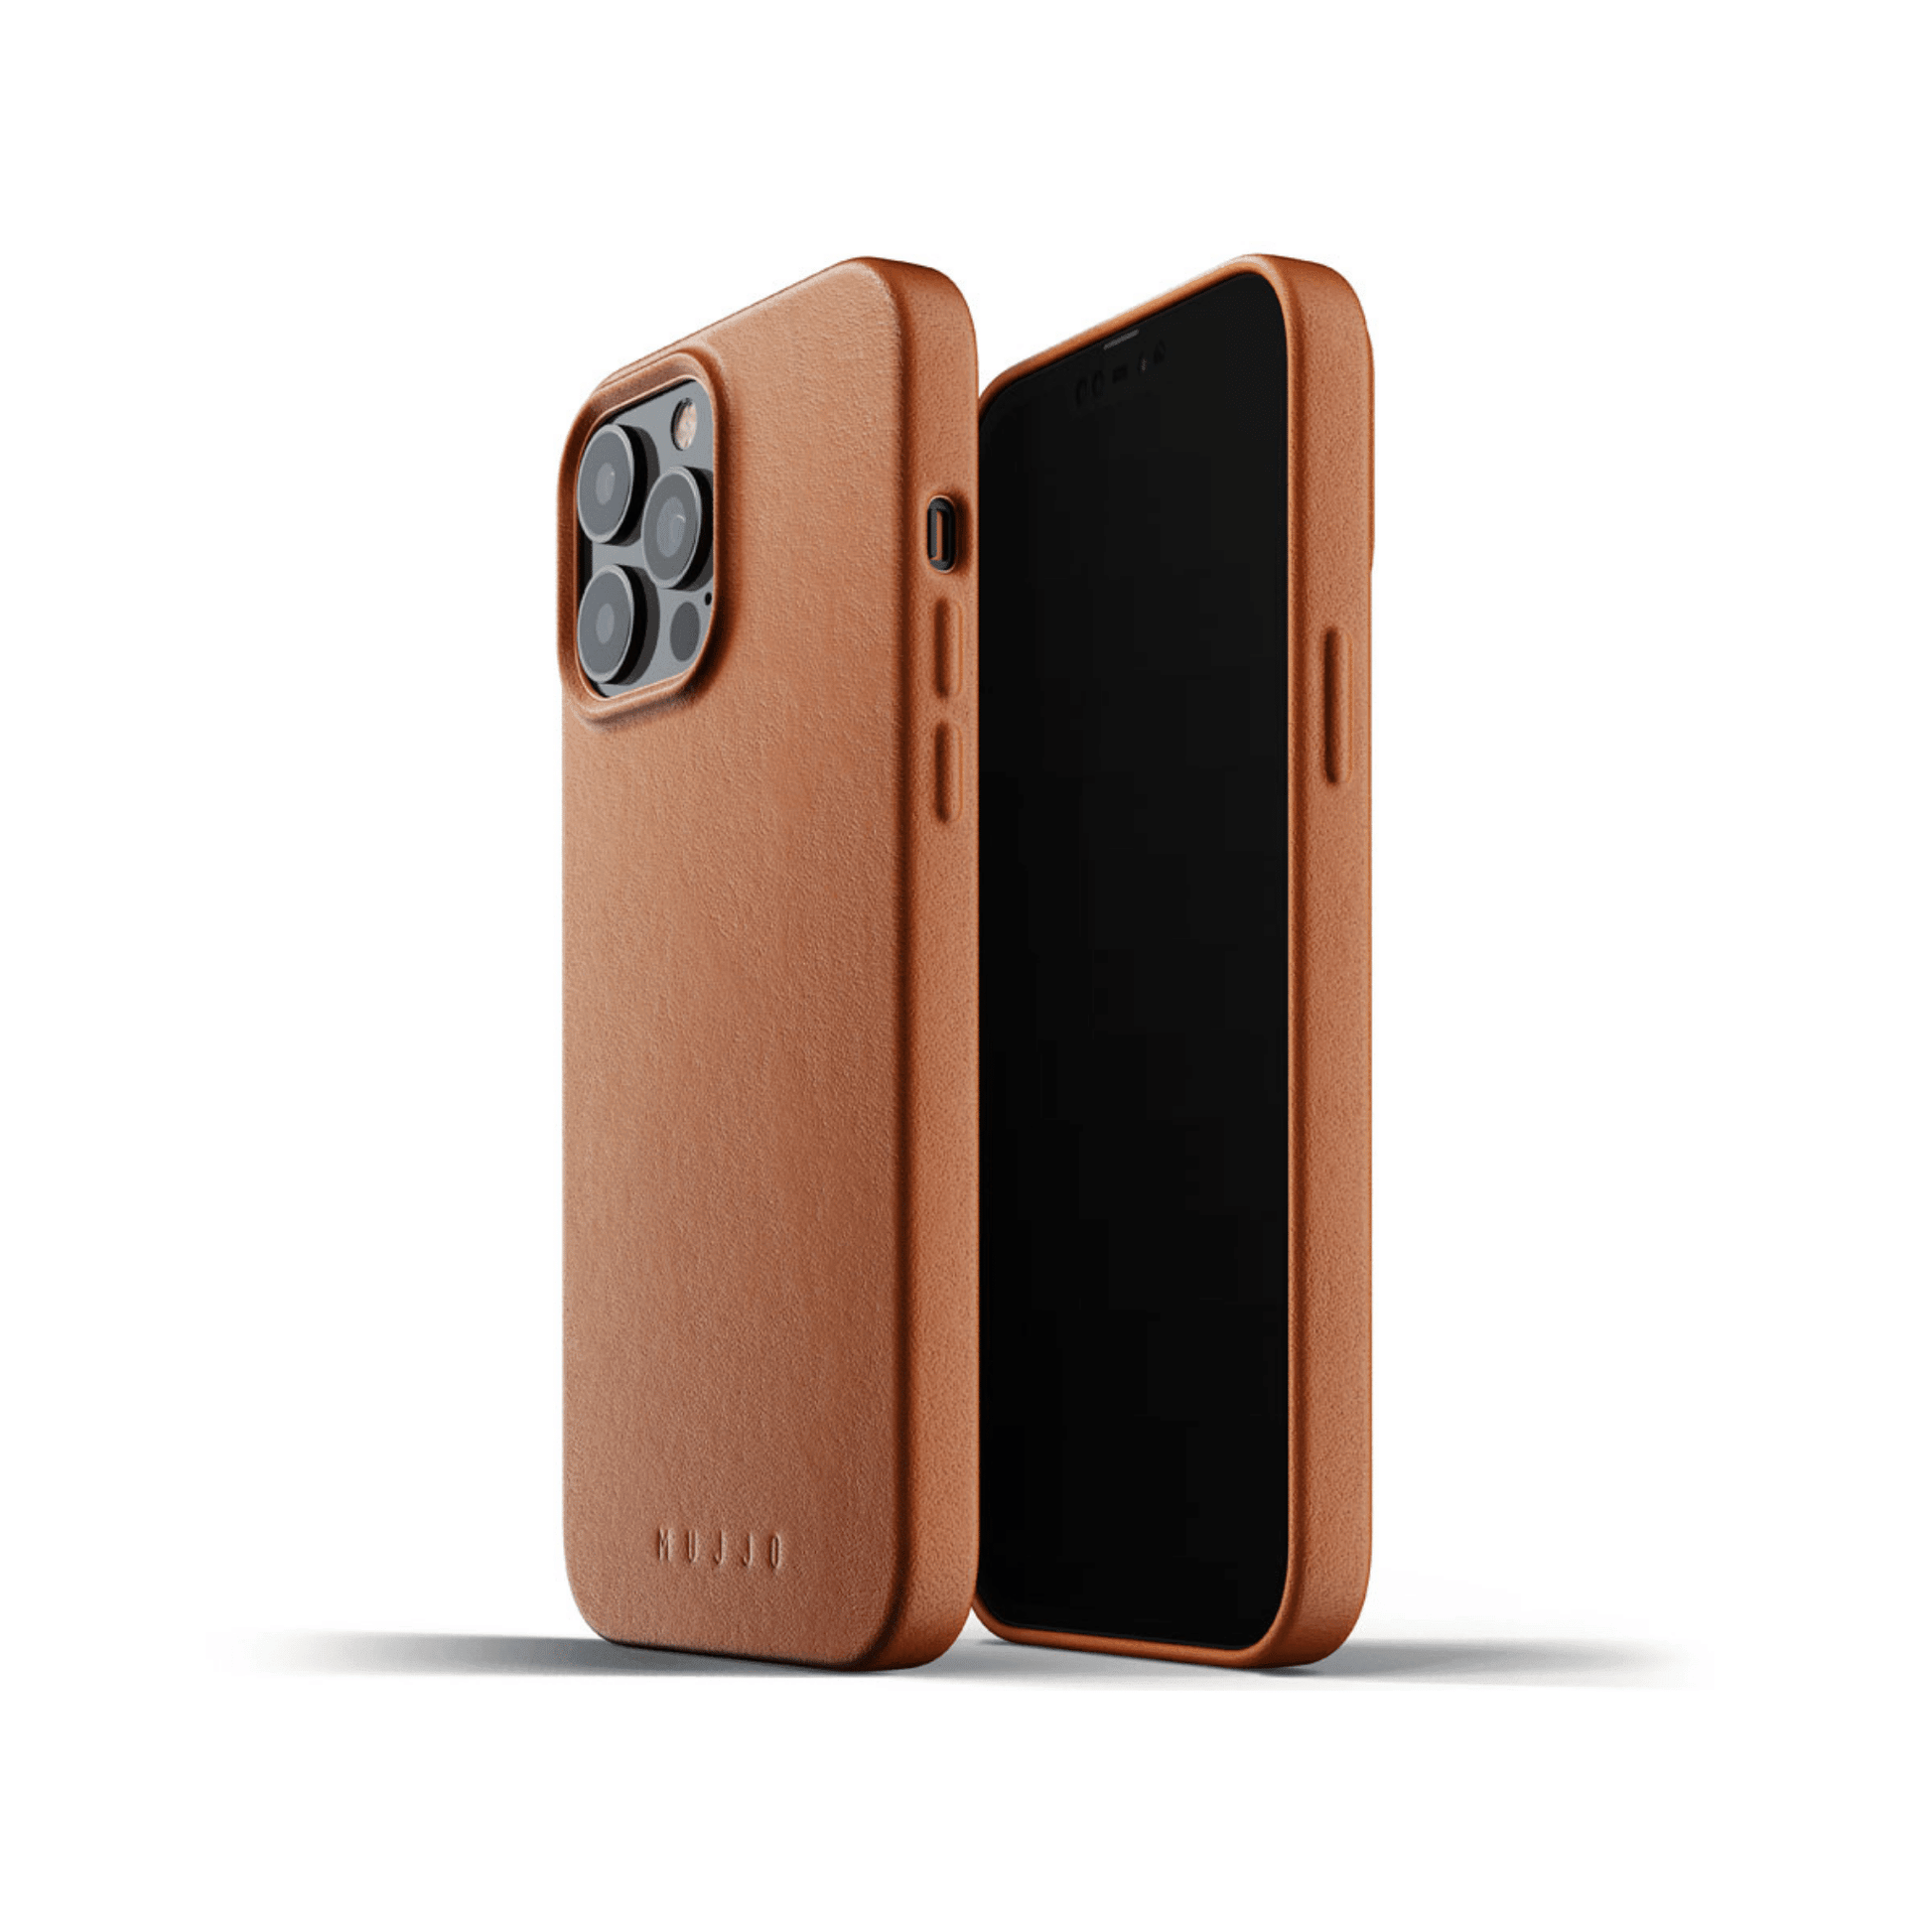 Mujjo - iPhone 13 Pro Max Full Leather Case - Braun